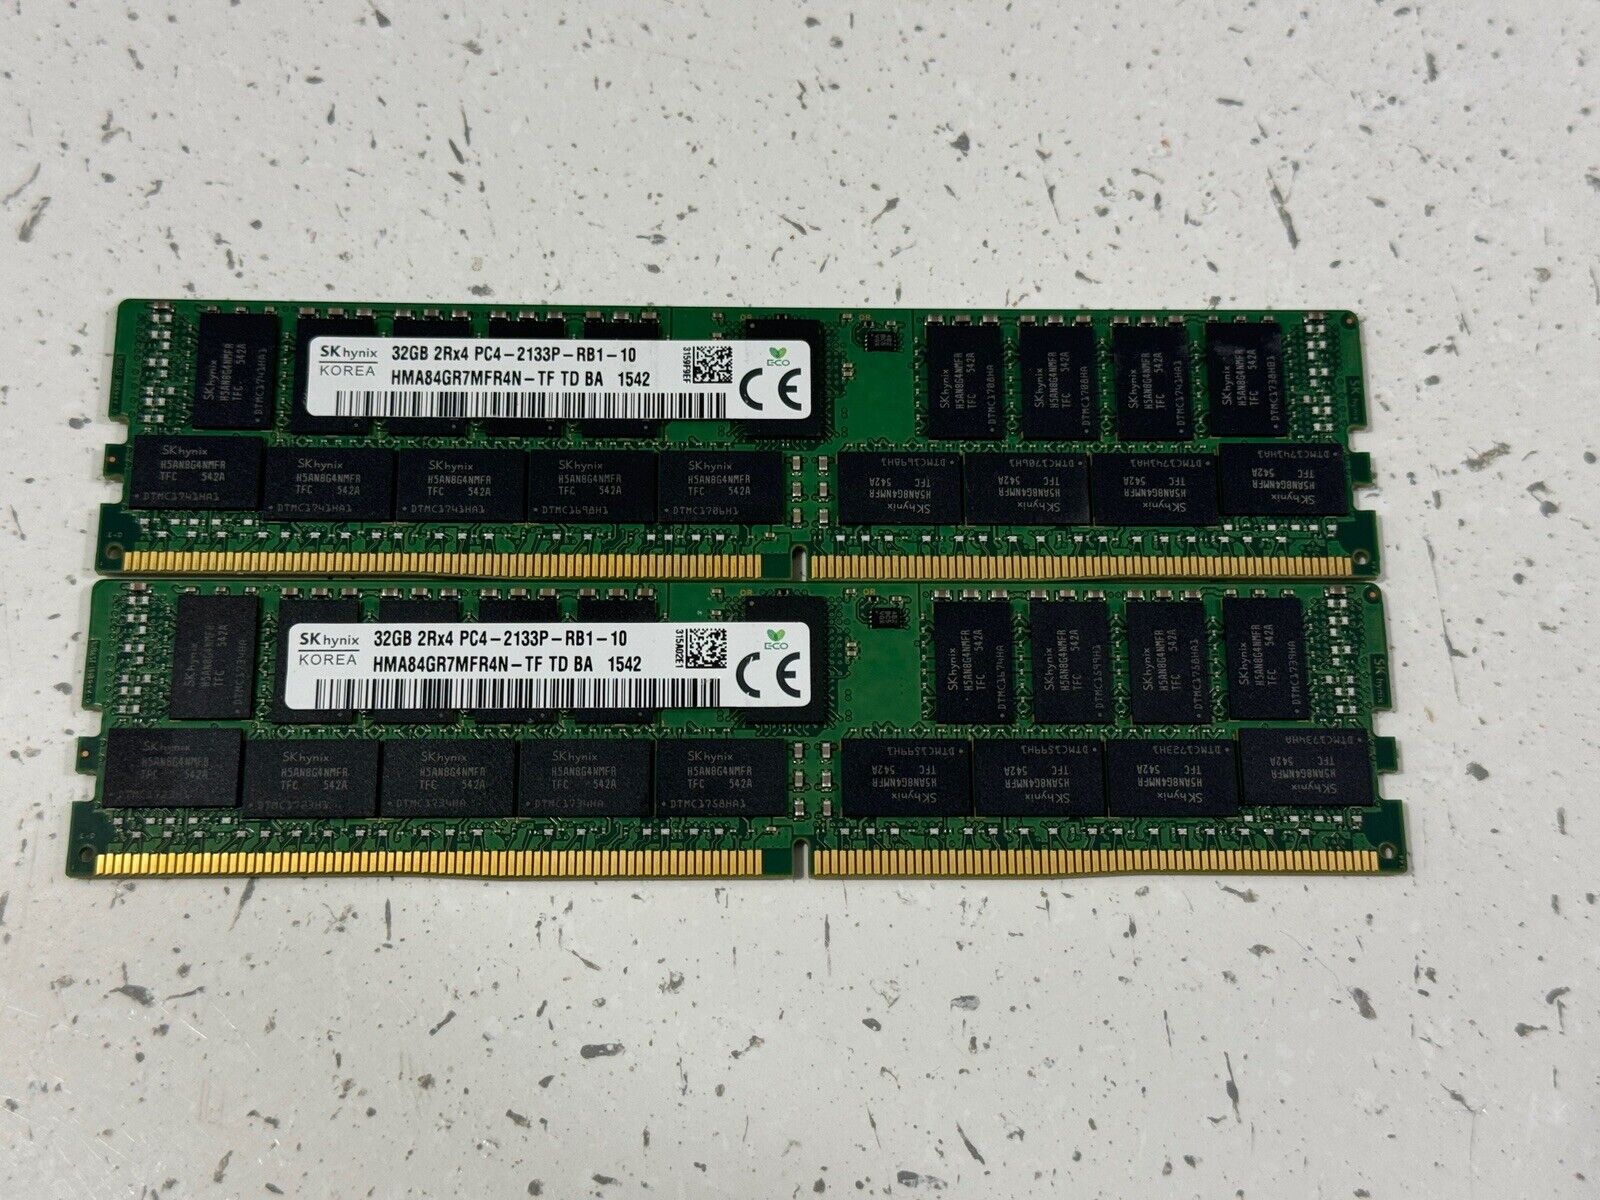 SK Hynix 64GB (2x32GB) 2Rx4 PC4-2133P-RB1-11 DDR4 Server RAM Memory